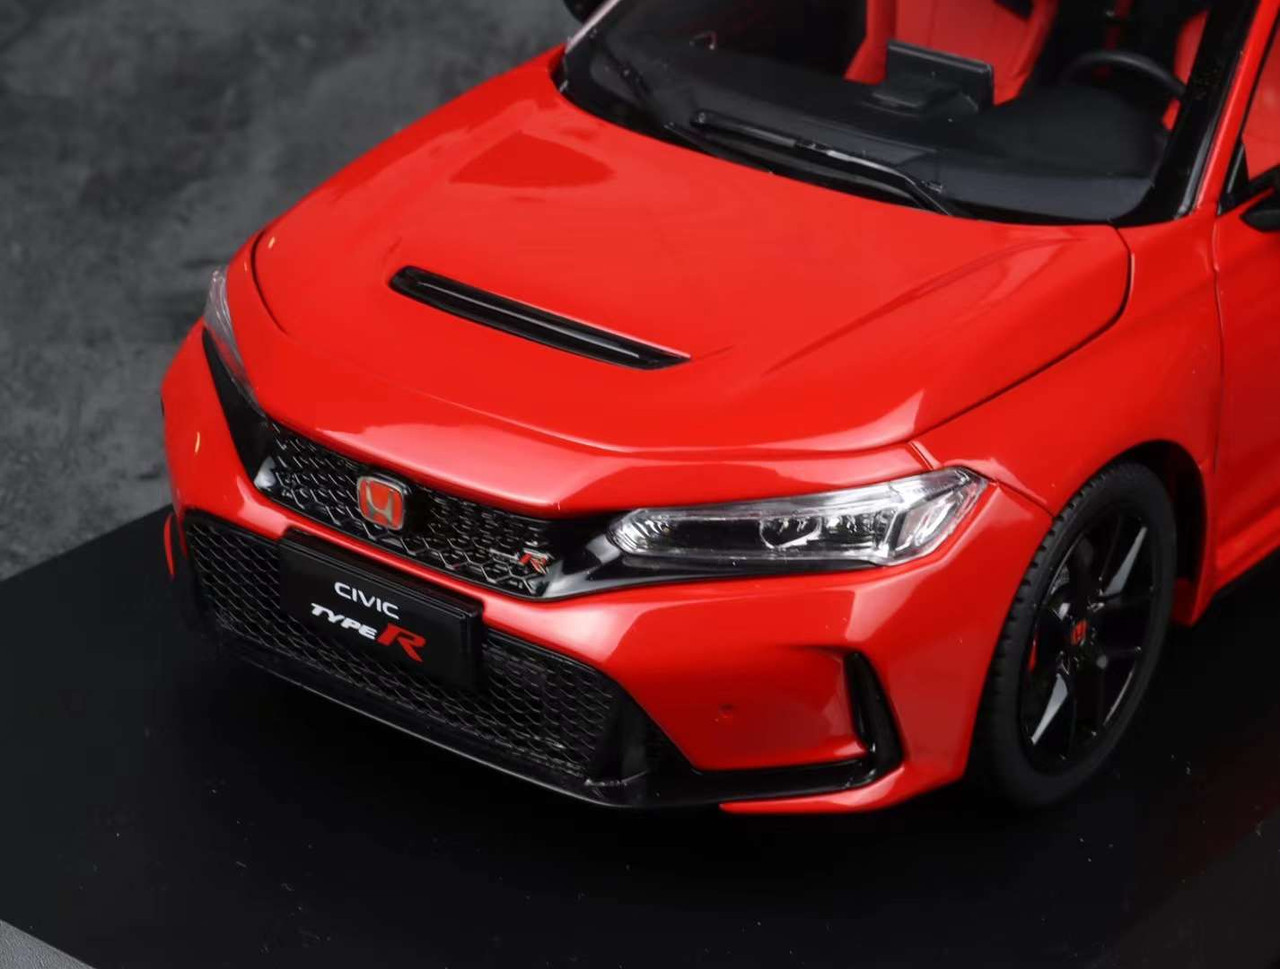 1/18 Dealer Edition 2023 Honda Civic Type-R FL5 (Red) Diecast Car Model